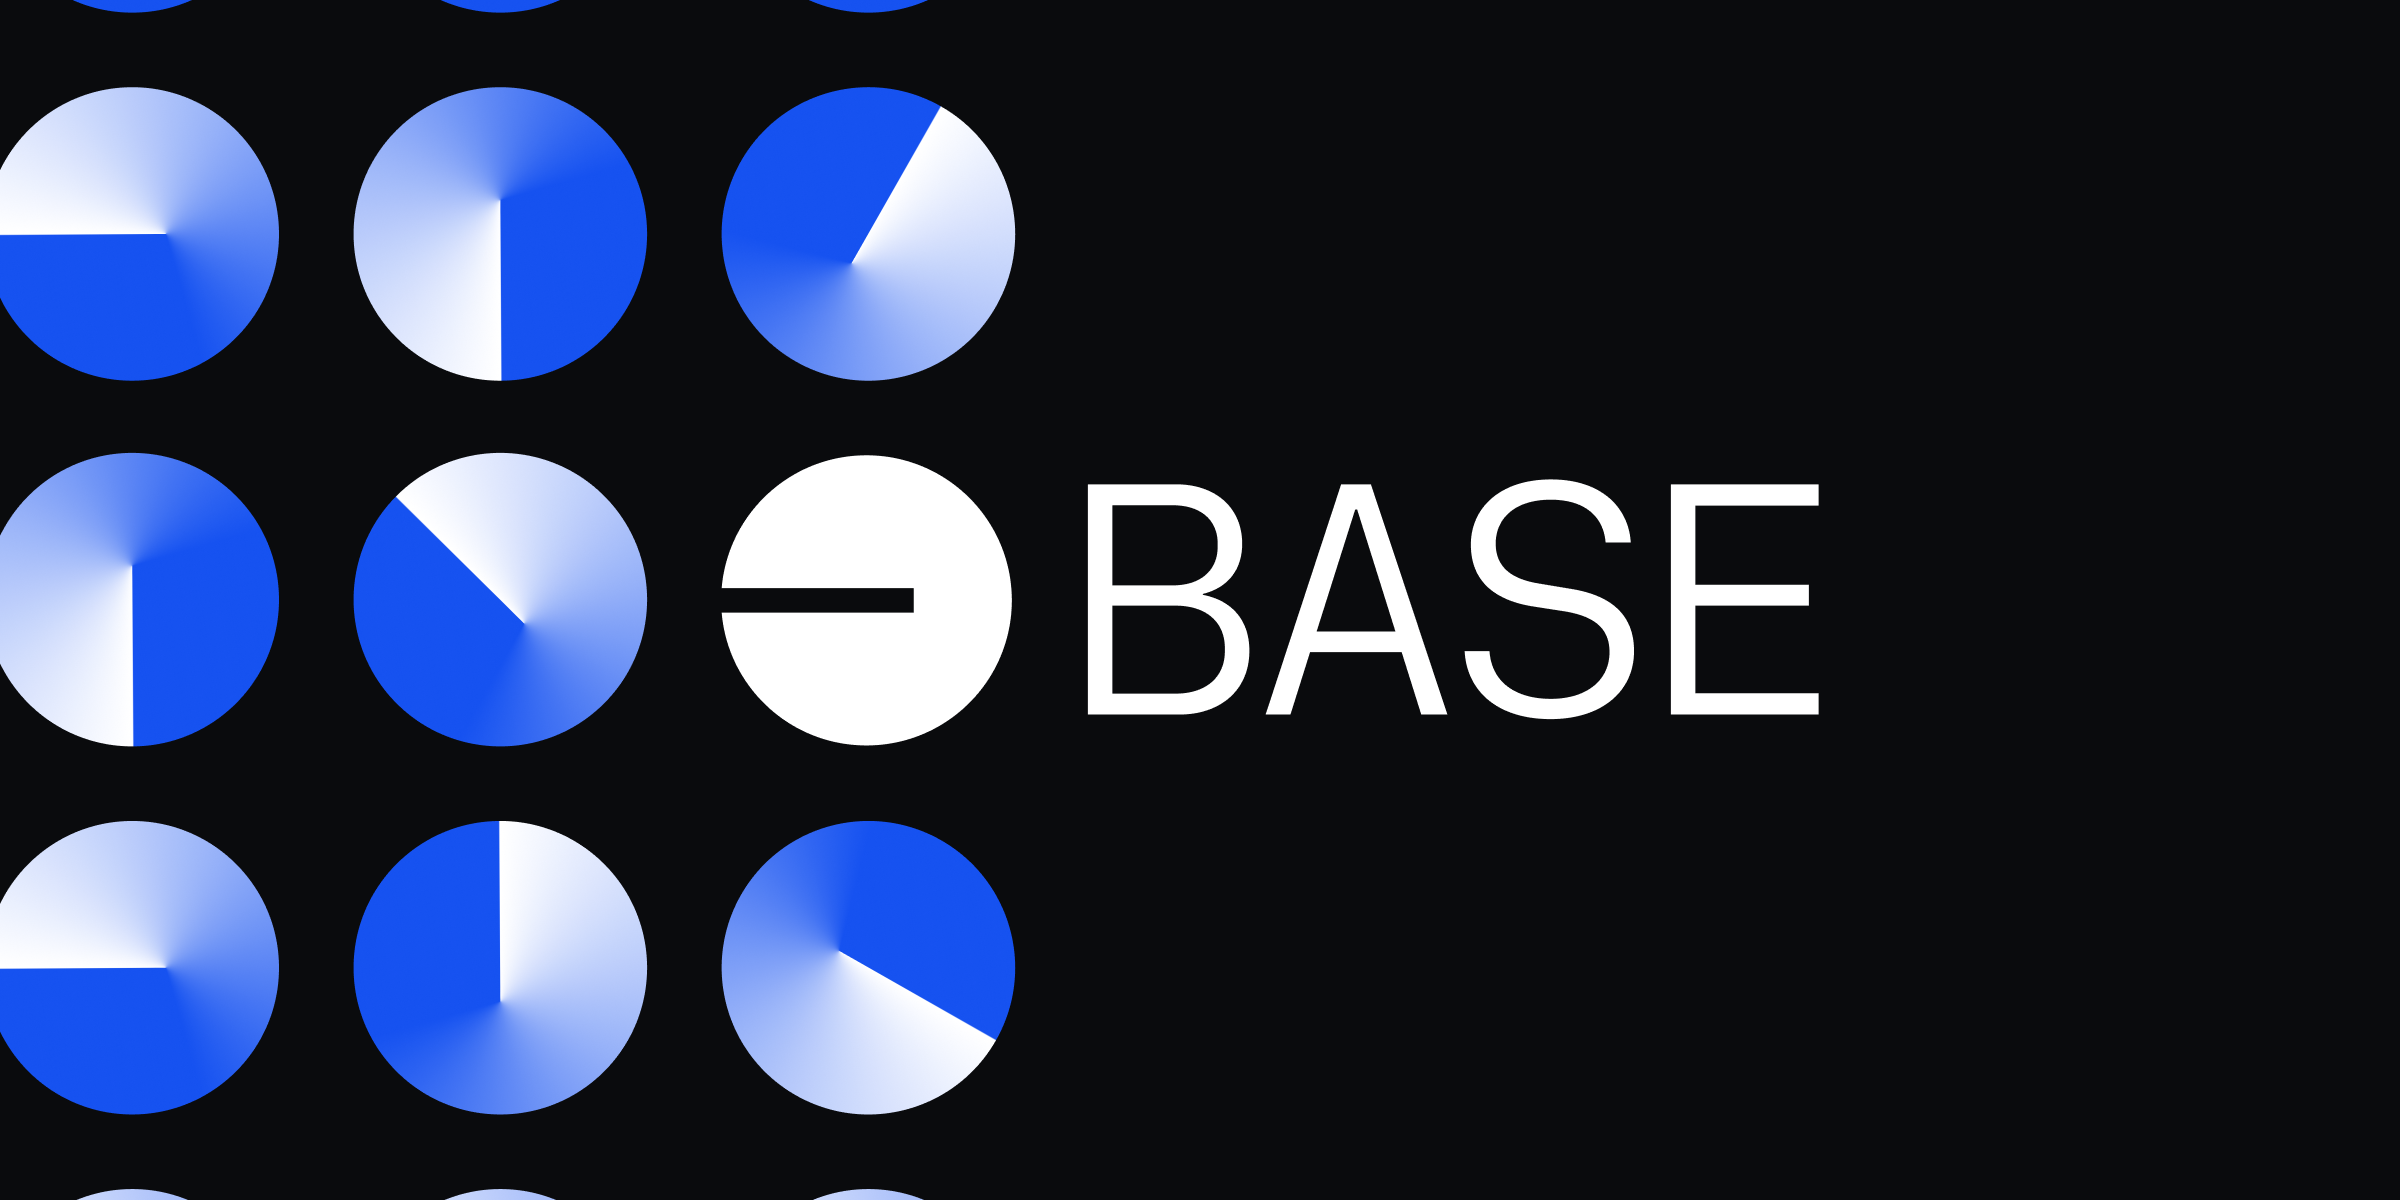 An image of the Base logo